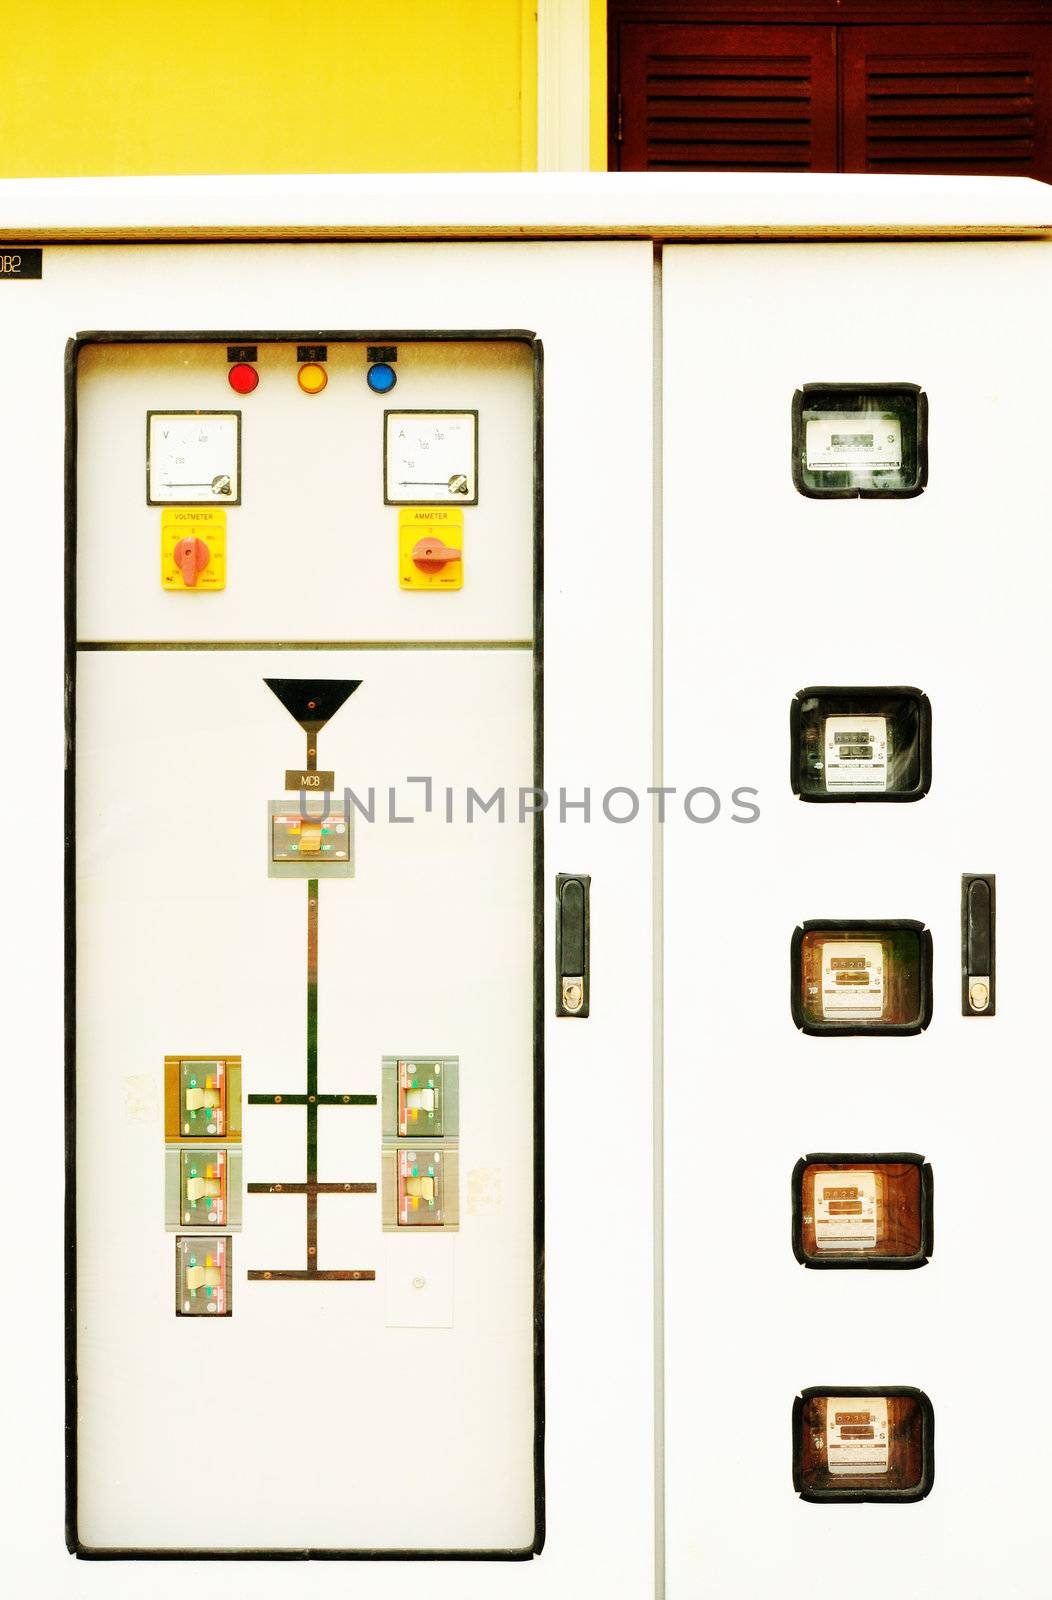 Electricity control panel